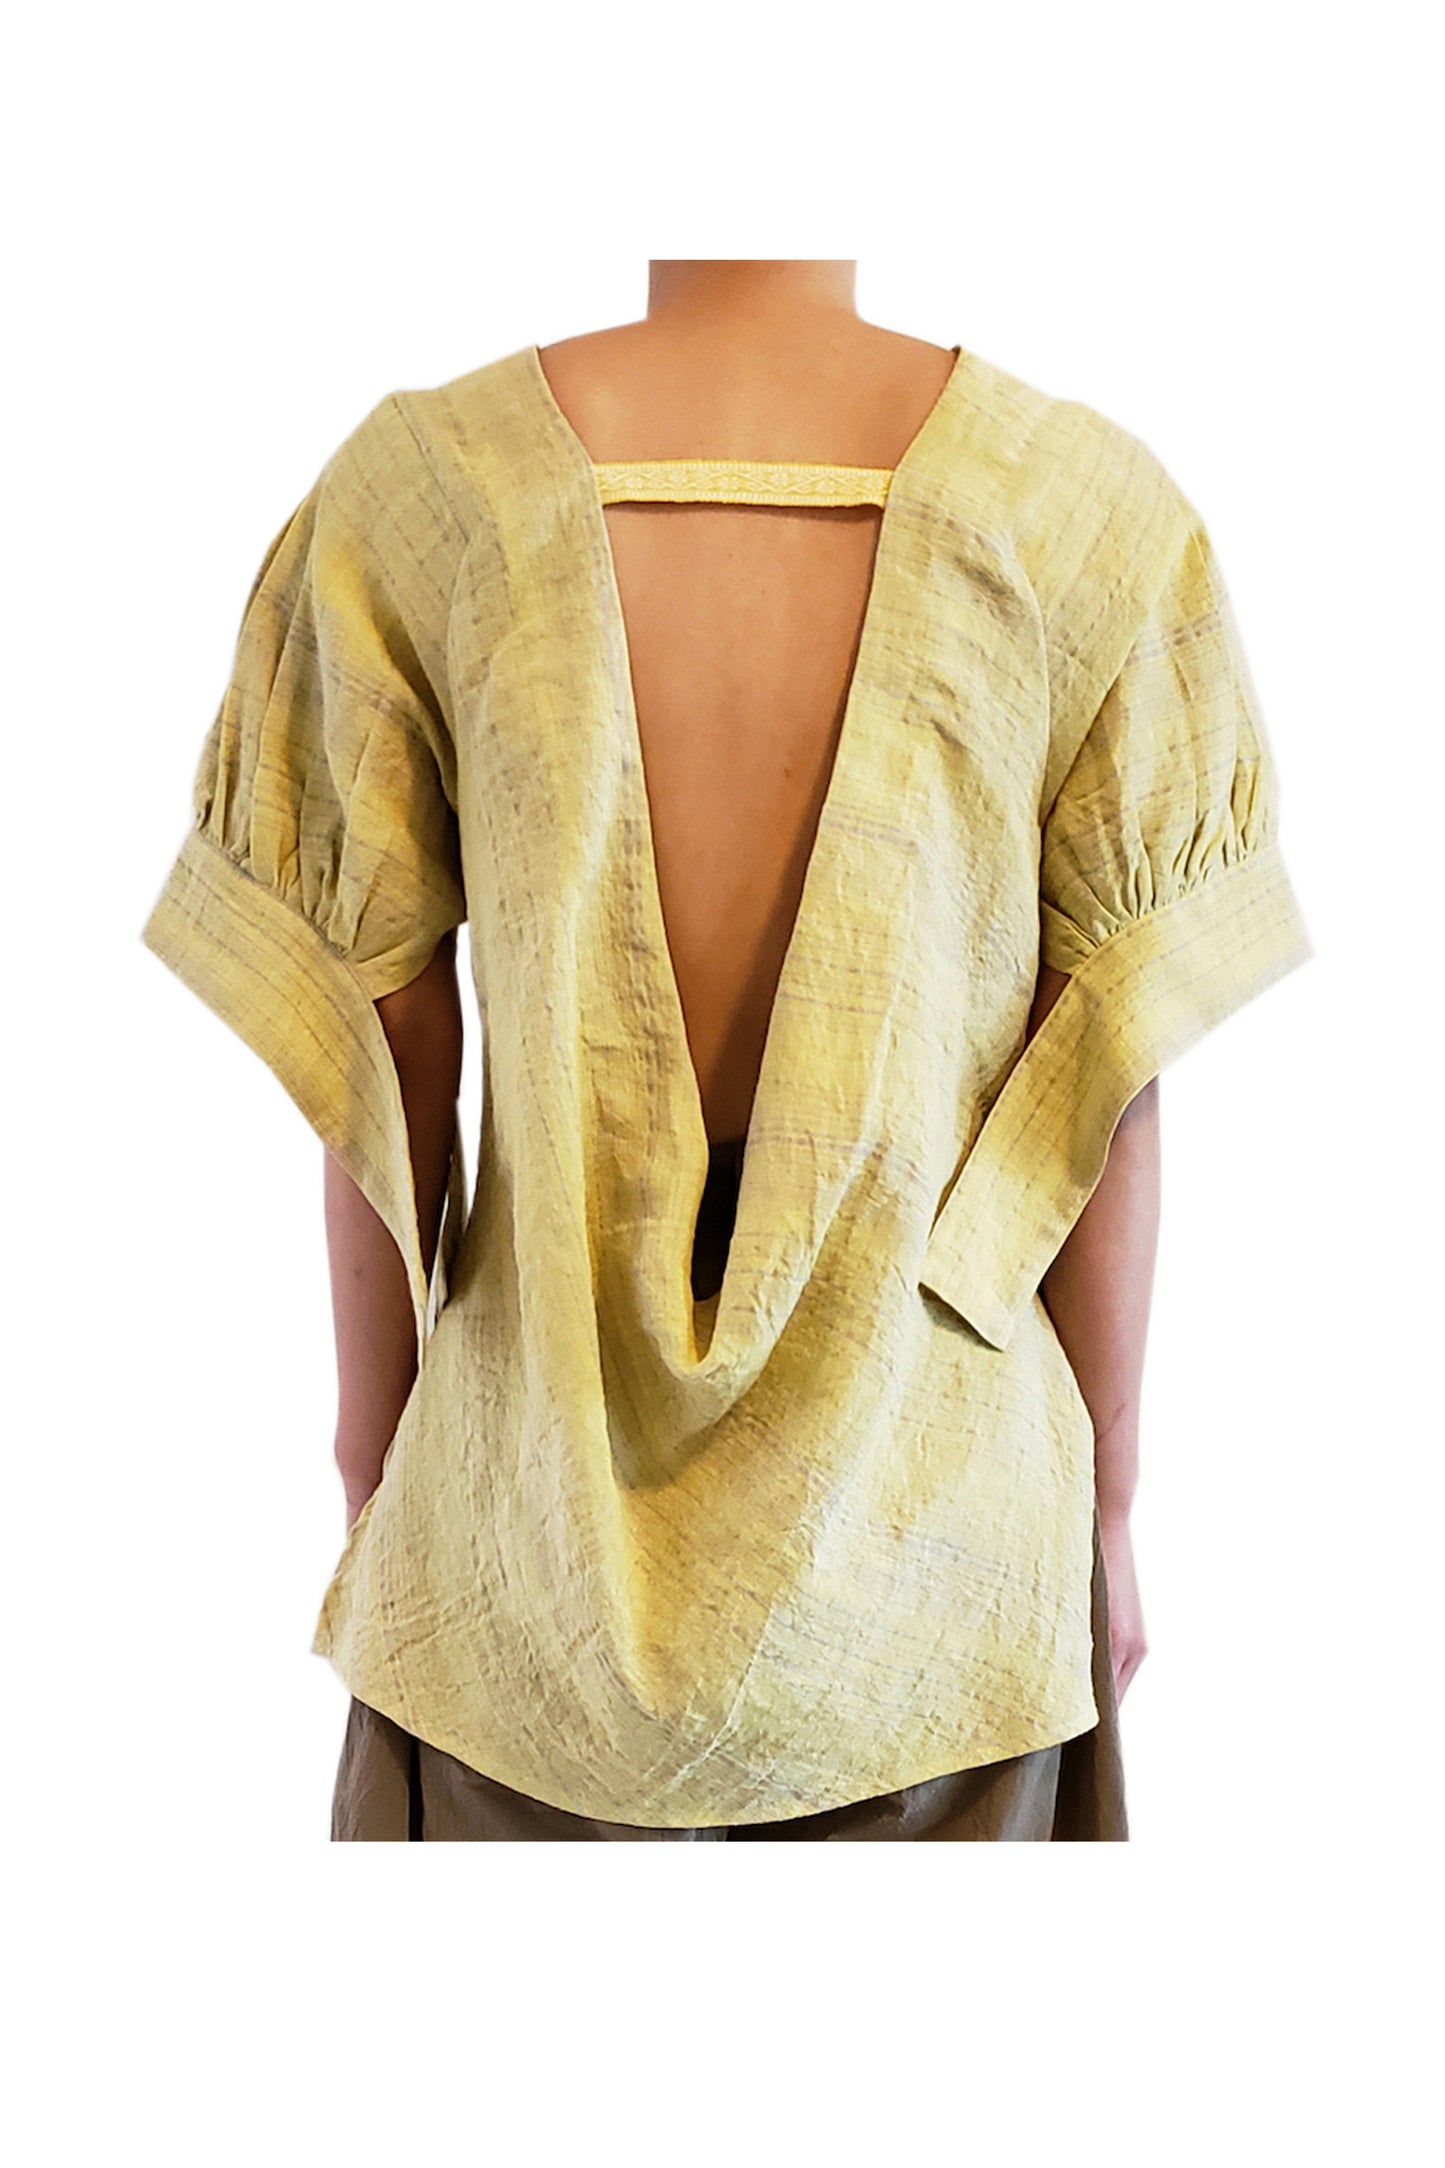 'L002' Back open linen blouse with Purepecha artisan woven tape